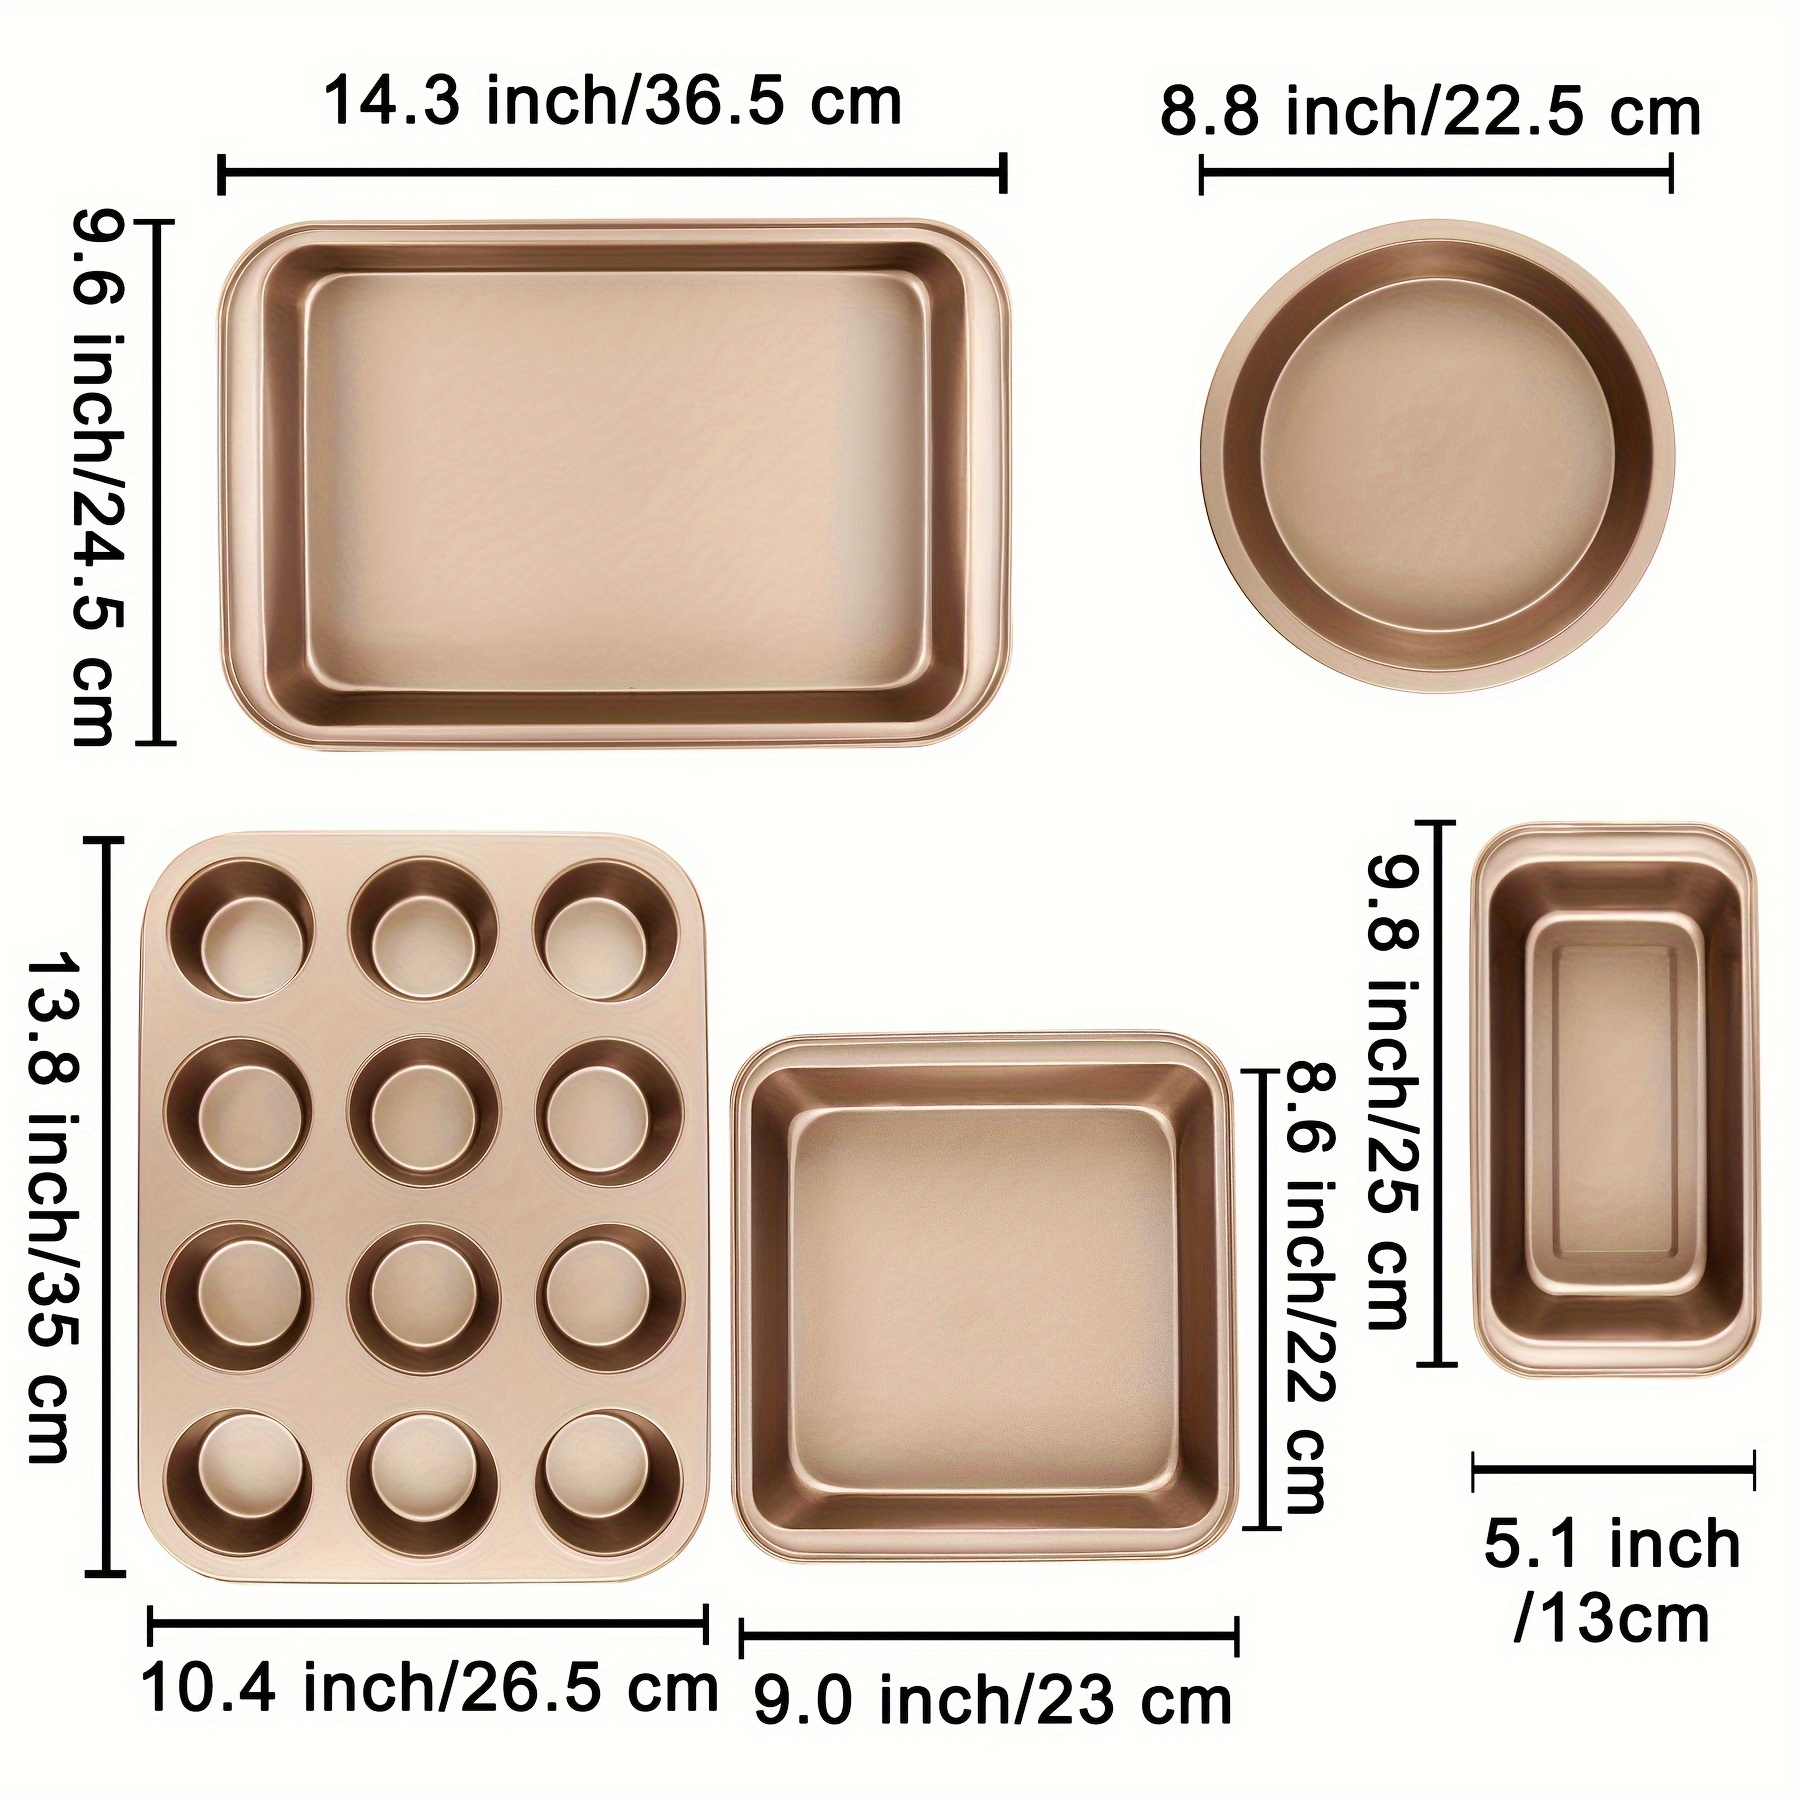 Rectangle Baking Tray Non Stick 33 x 22.5 cm